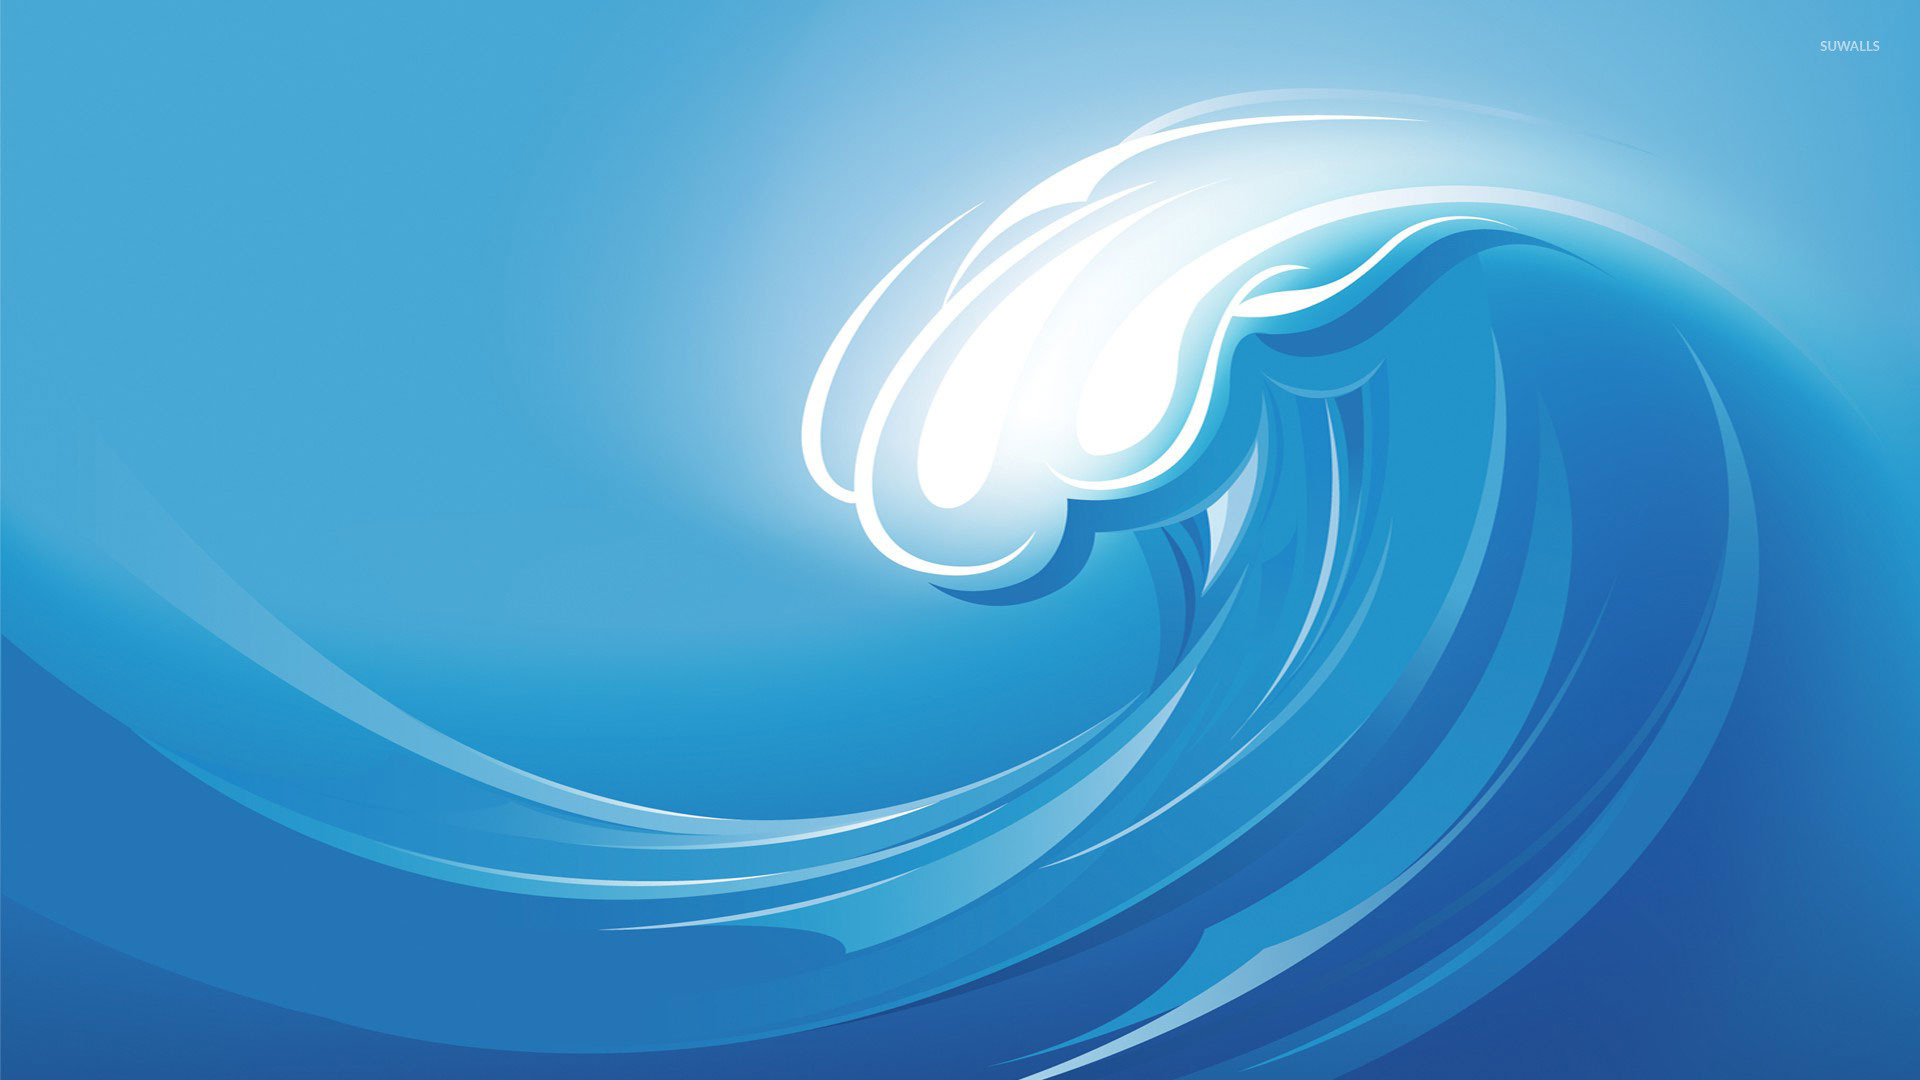 Animated Beach Waves Wallpaper - WallpaperSafari
 Ocean Water Waves Cartoon